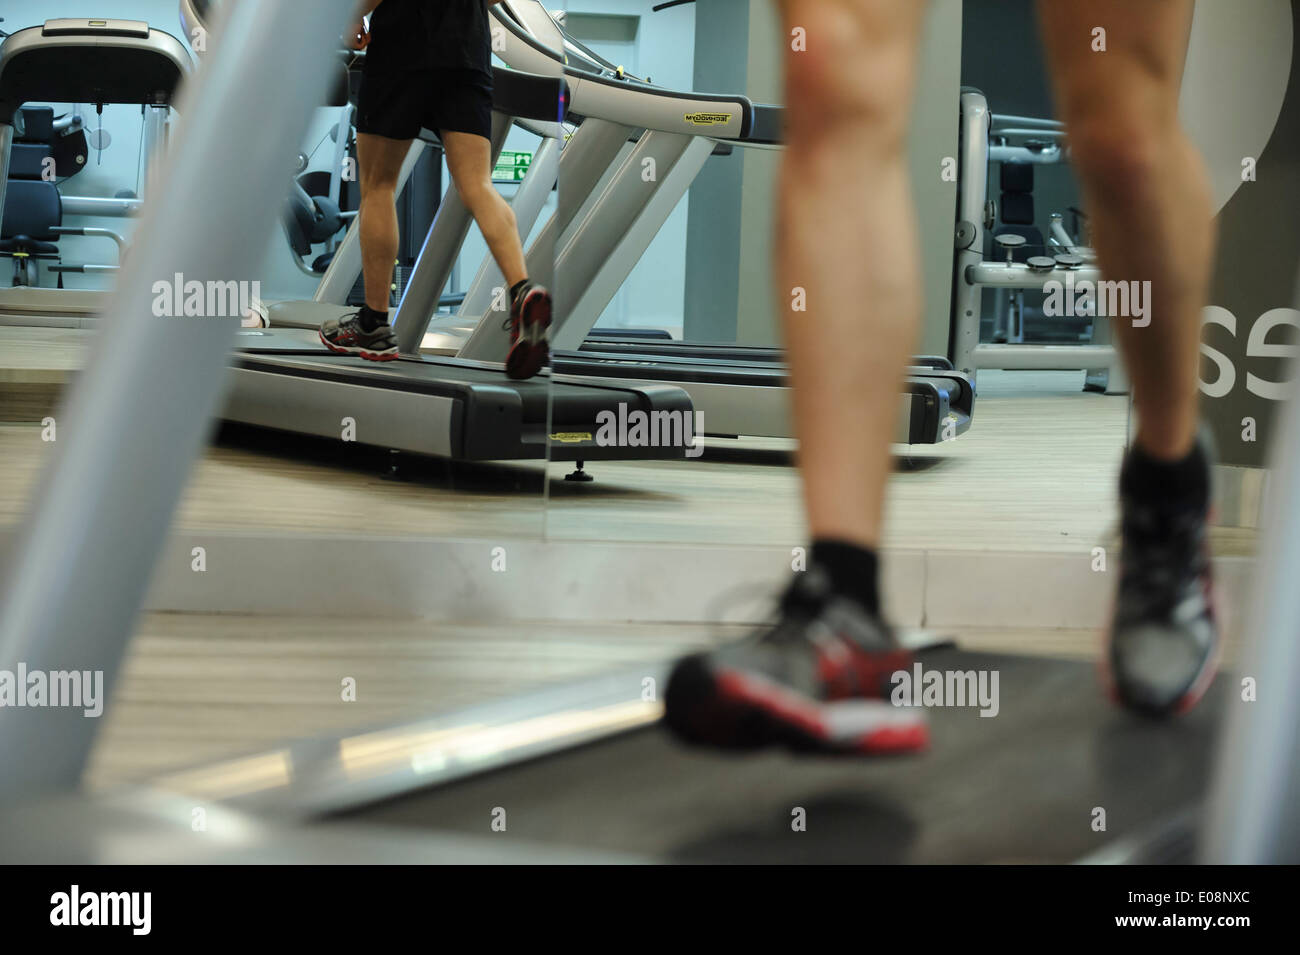 Laufen auf dem Laufband im Fitnessstudio Stockfoto